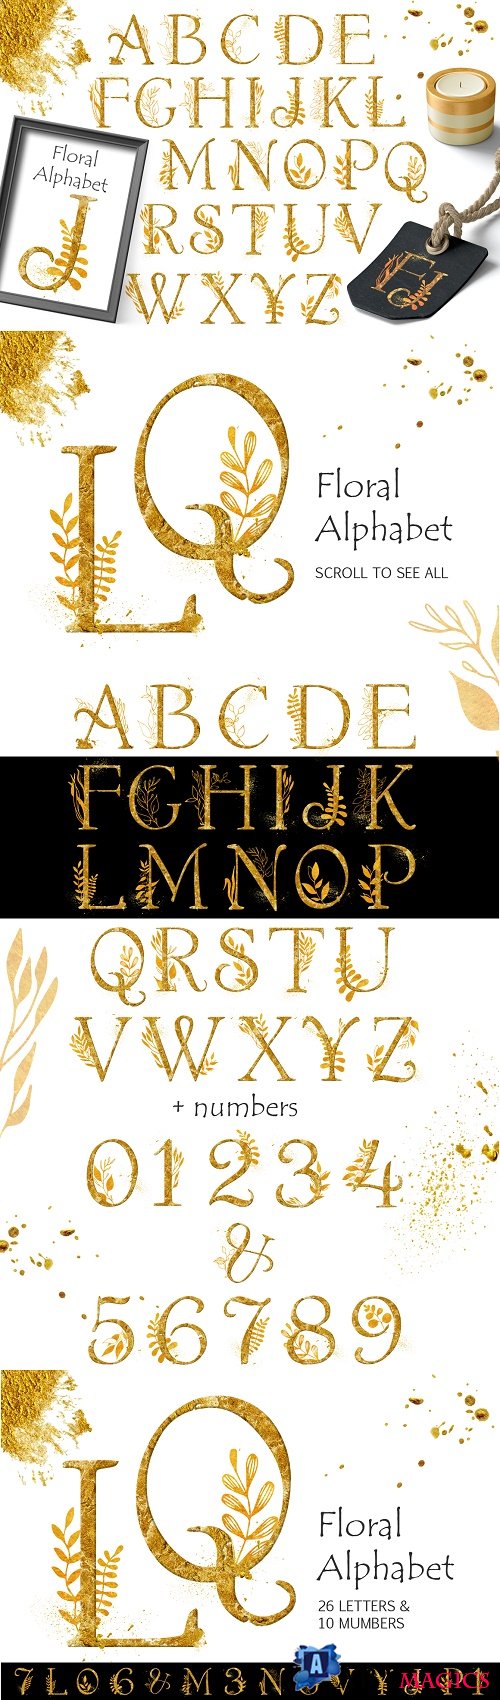 Gold Floral Alphabet - 125656